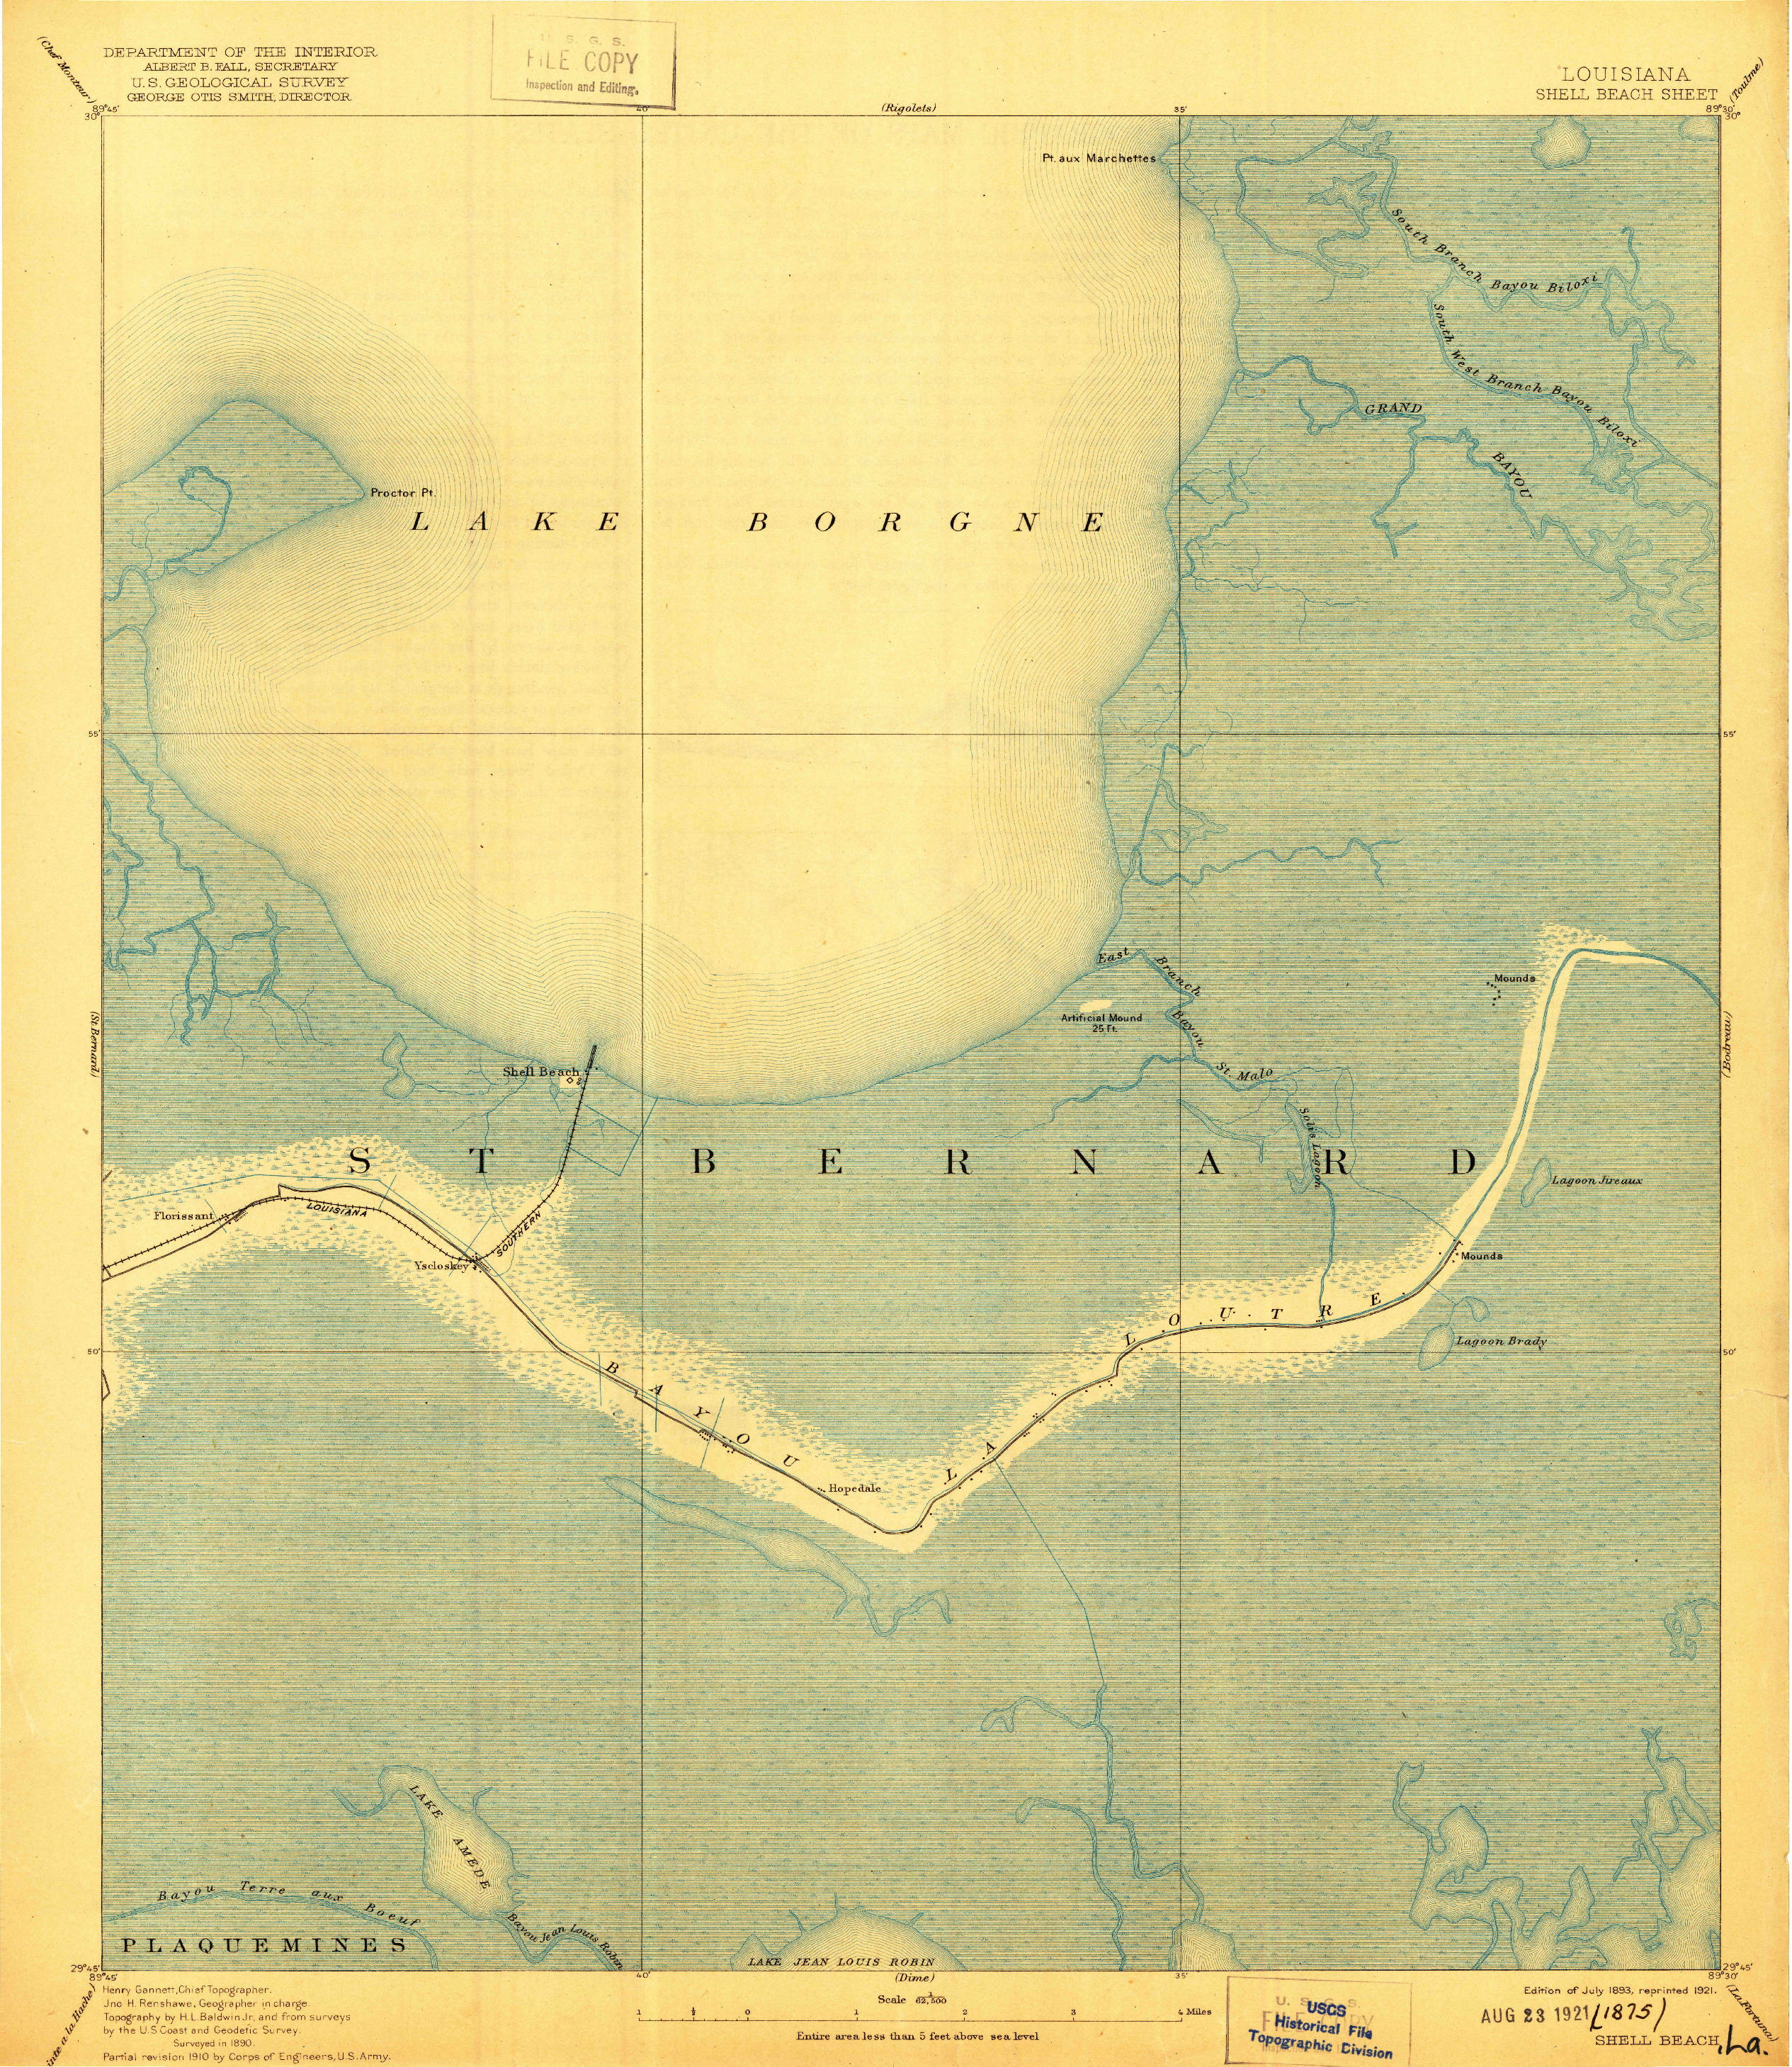 old map of hopedale, louisiana